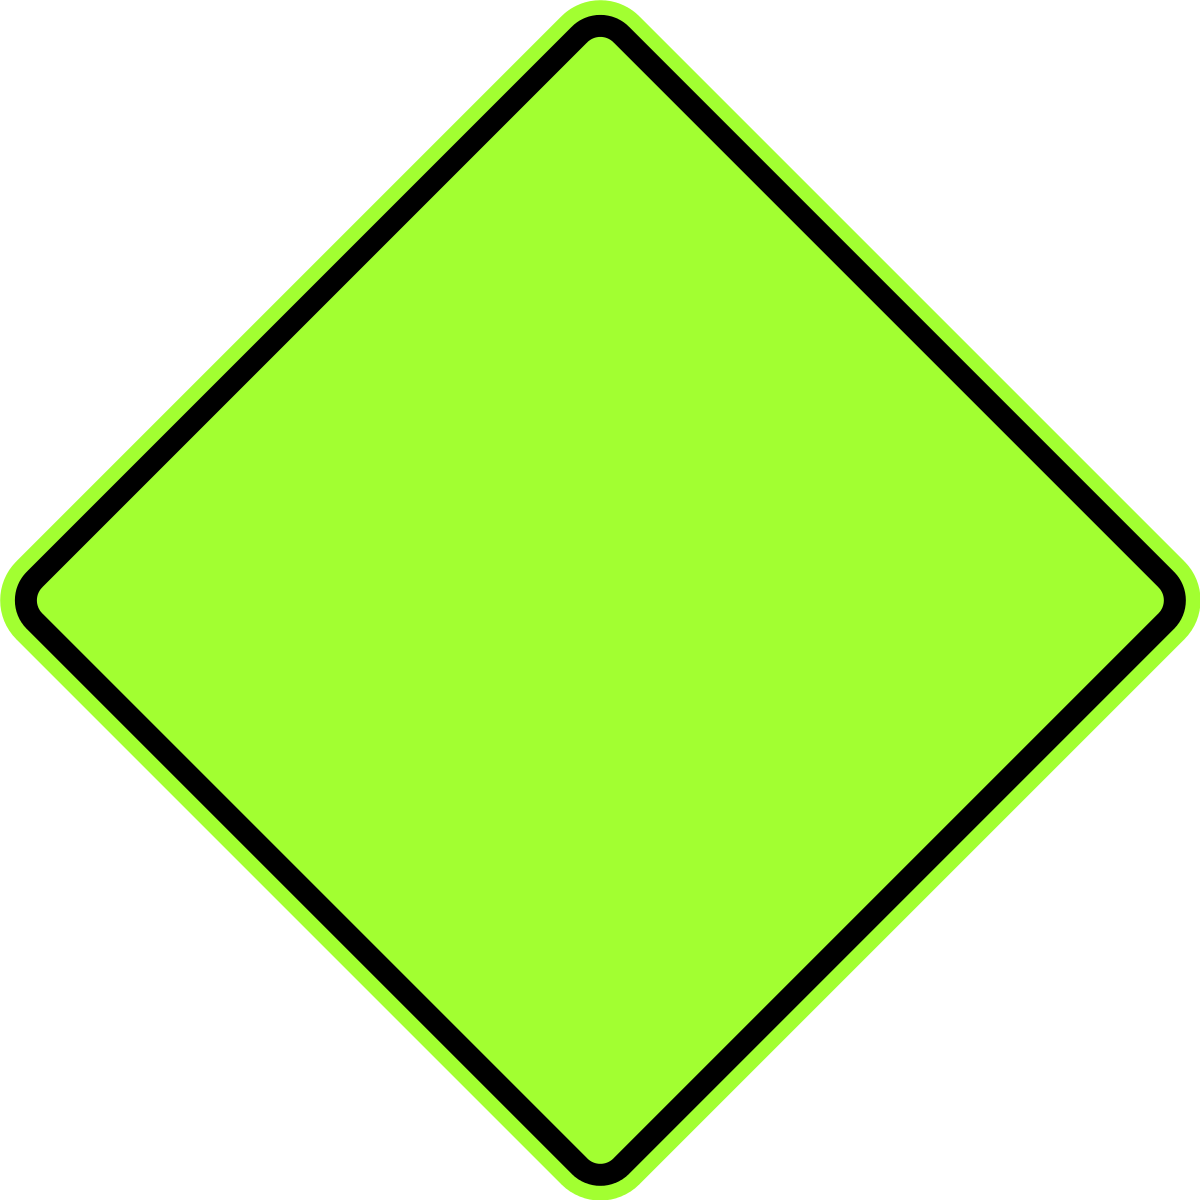 fluorescent label for warnings